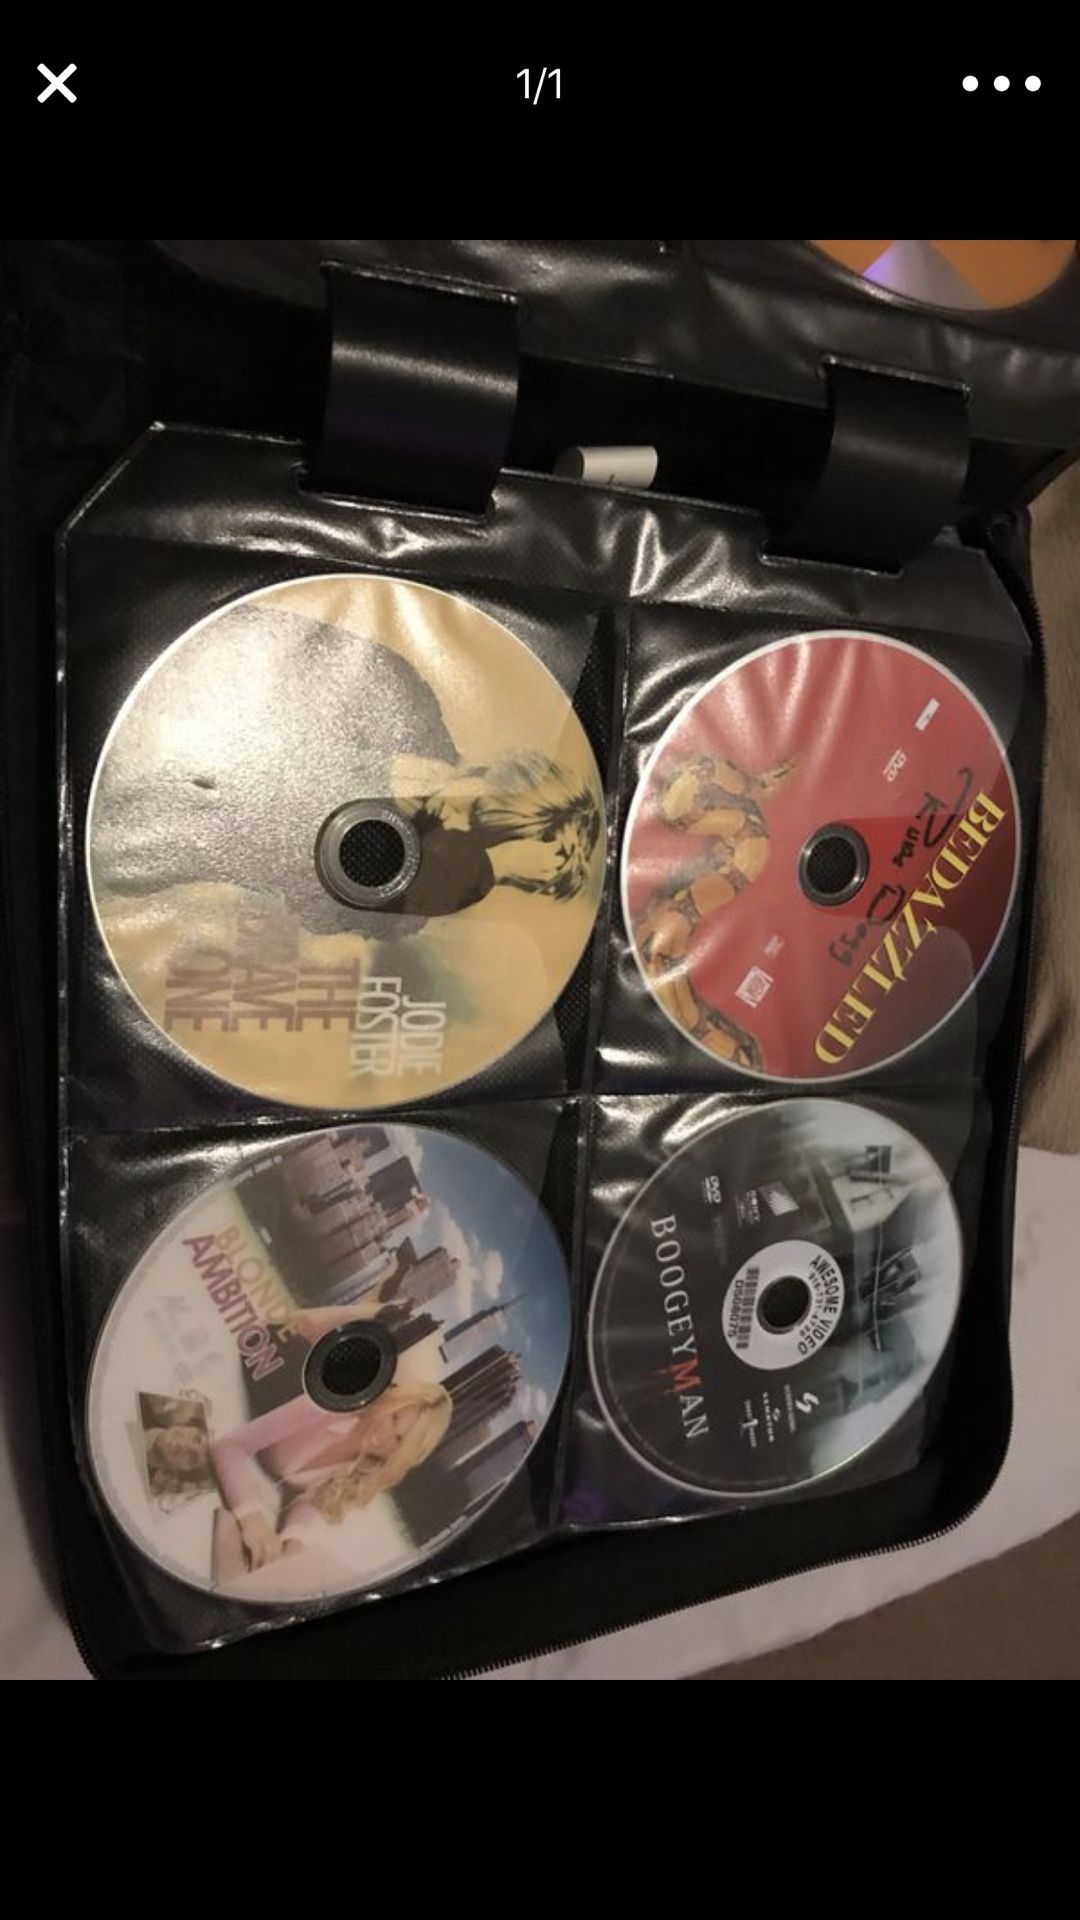 DVDs no cases